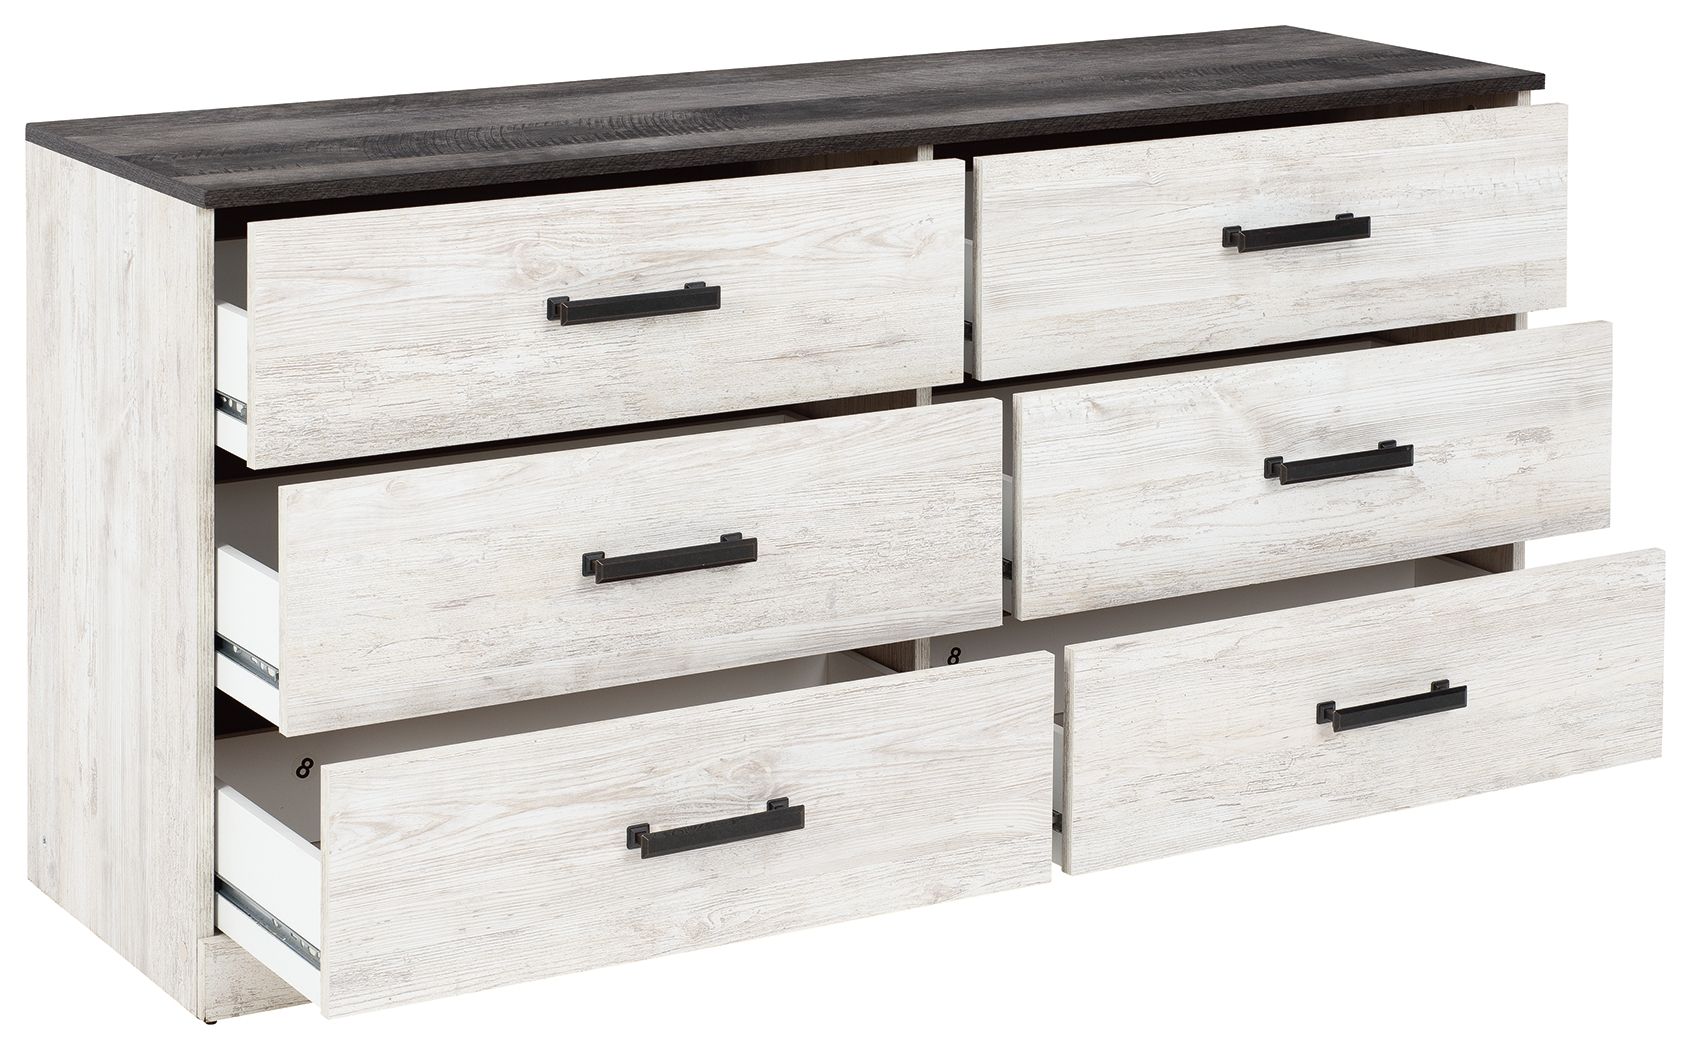 Shawburn Dresser - 6 Drawers (White/Black/Gray)